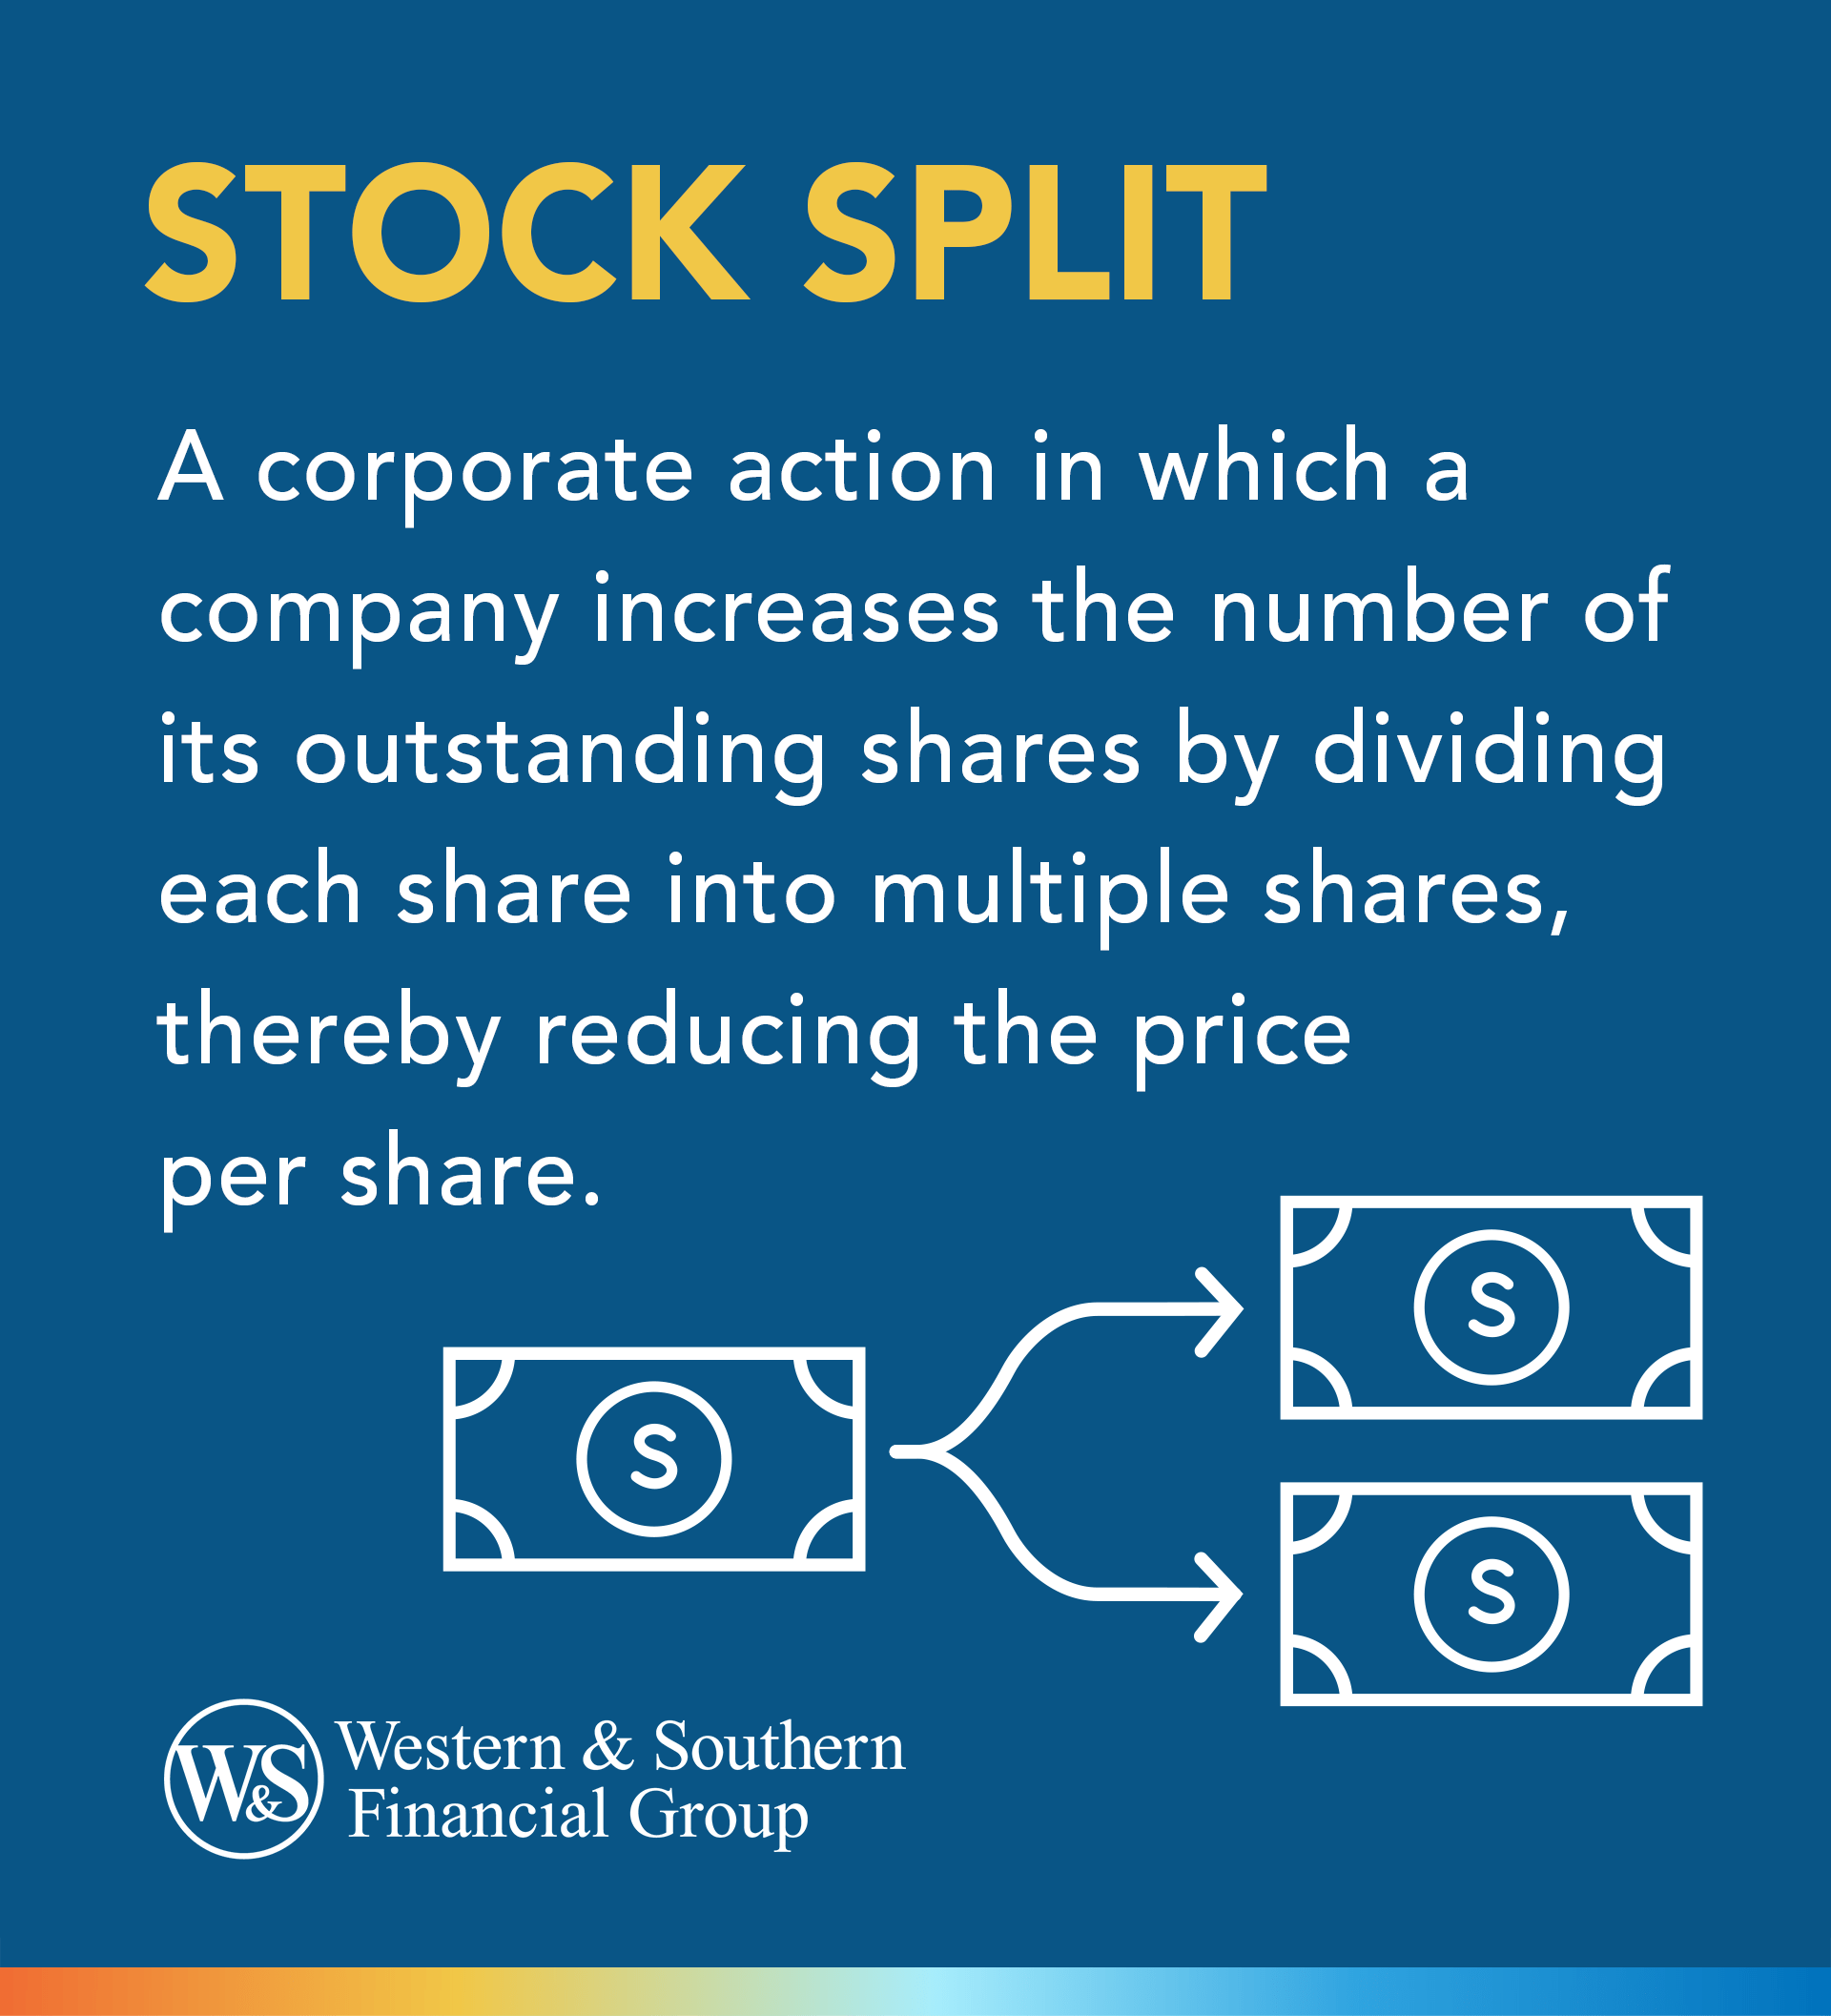 Stock split definition